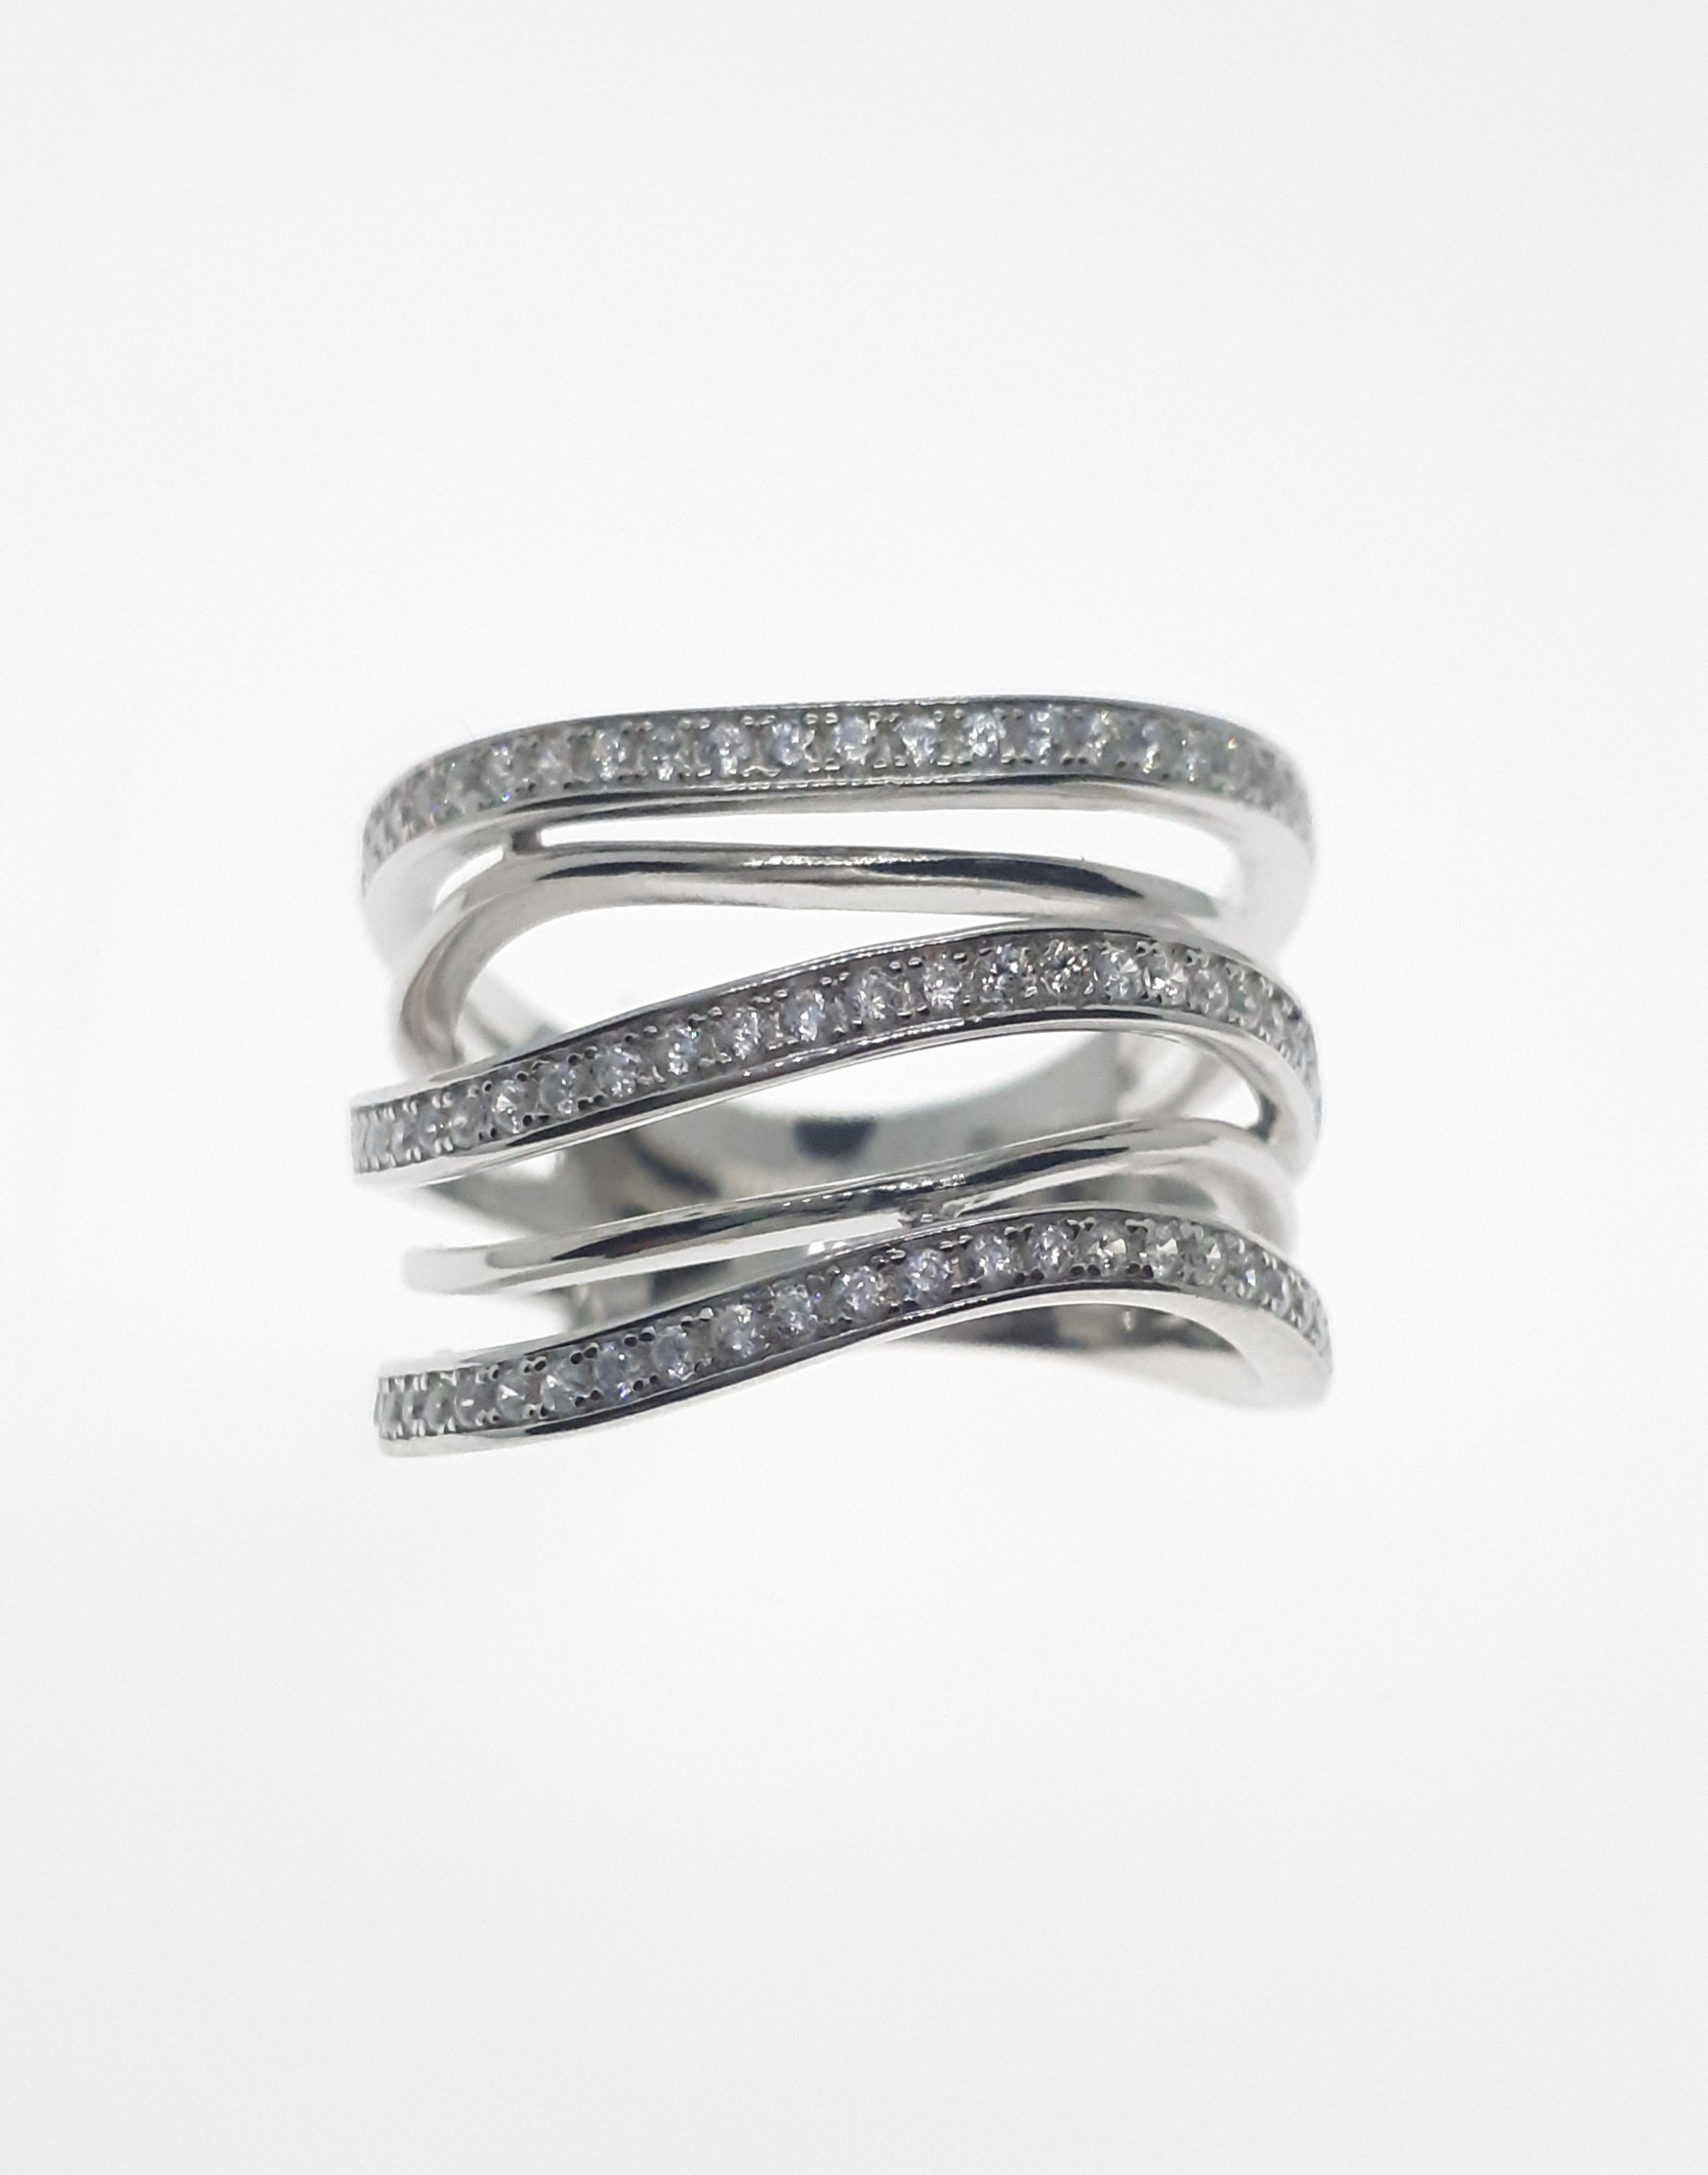 Sensi joyas jewellery Granada silver engagementSILVER AND ZIRCONIA RING 